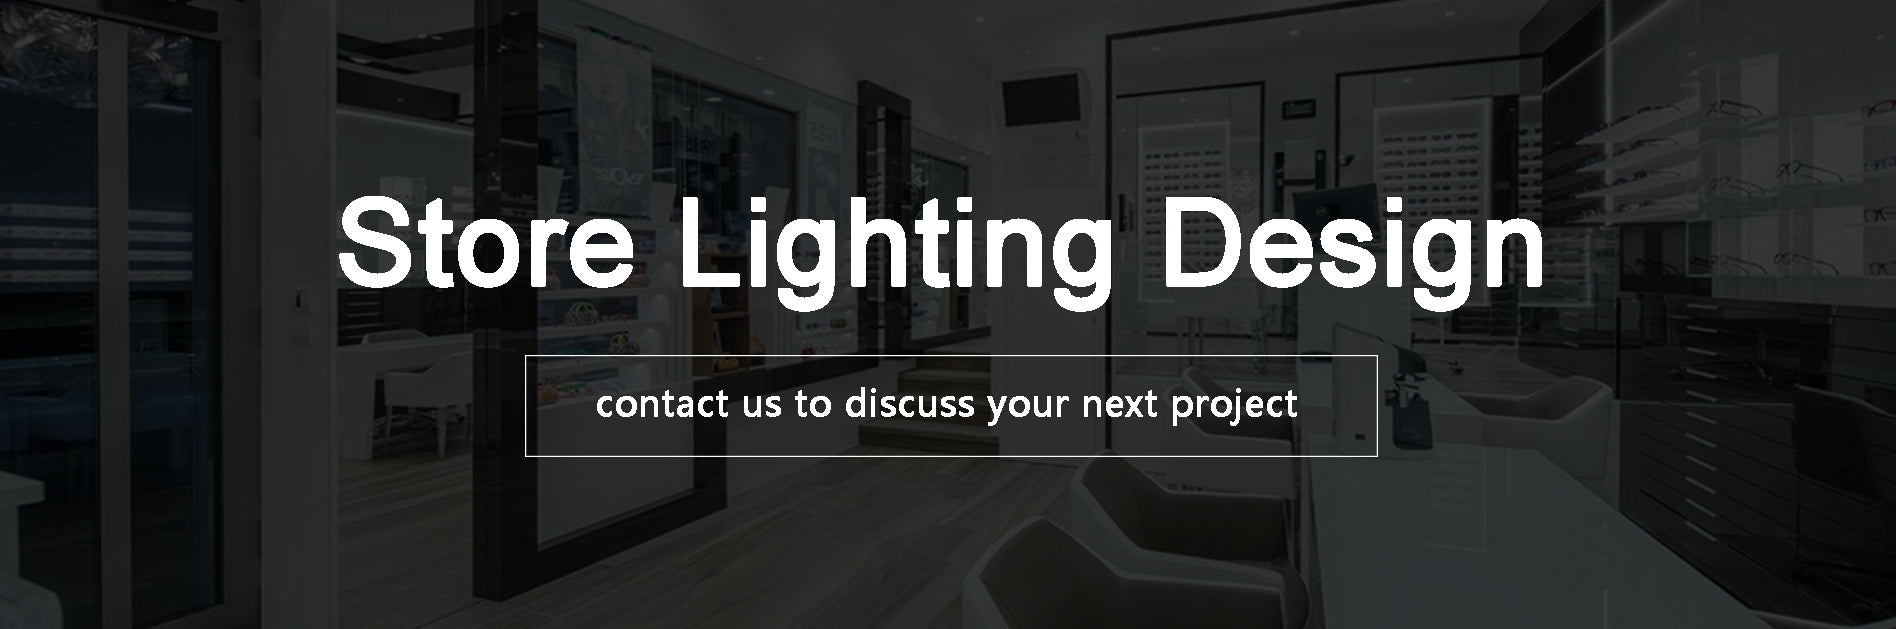 store lighting design contact us